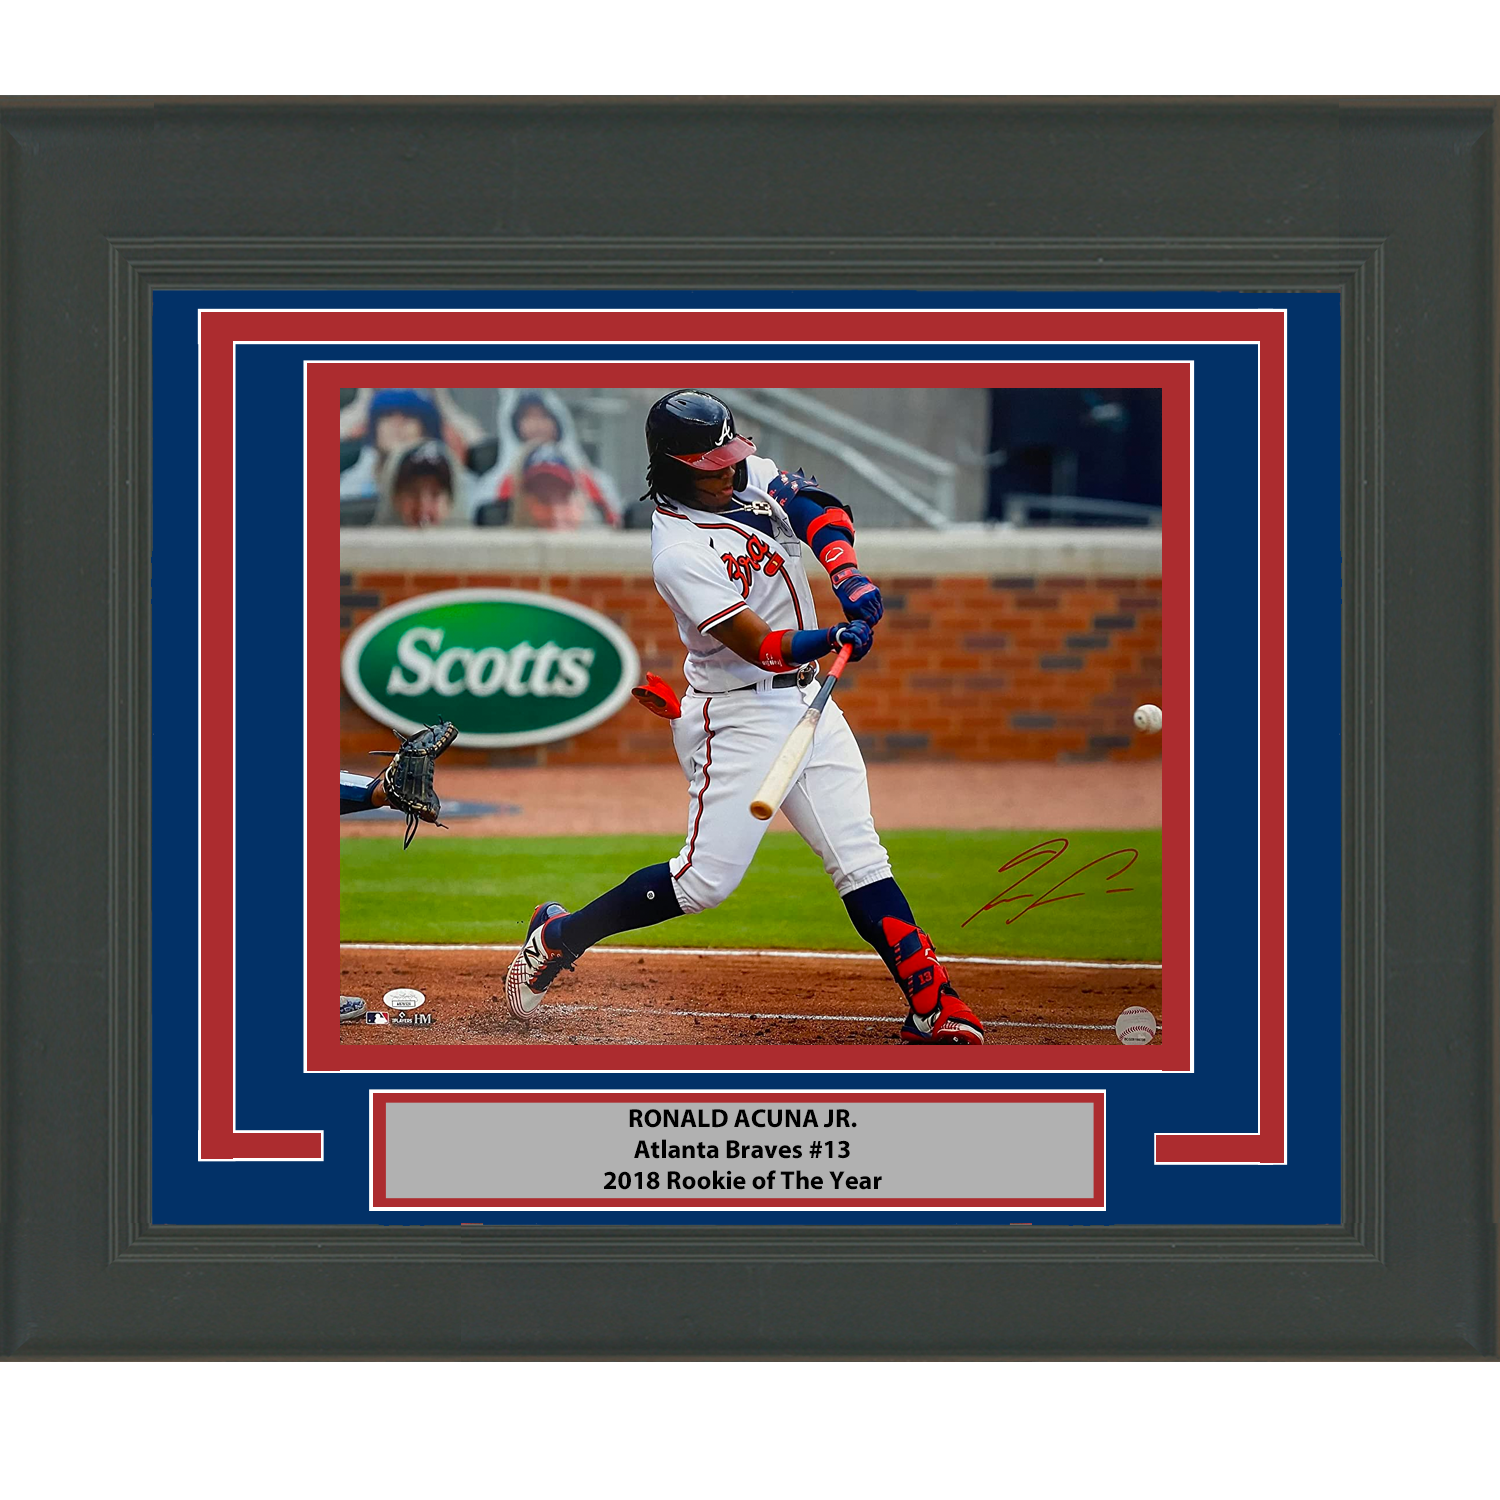 Framed Autographed/Signed Ronald Acuna Jr. Atlanta Braves 16x20 Baseball  Photo JSA COA #2 - Hall of Fame Sports Memorabilia